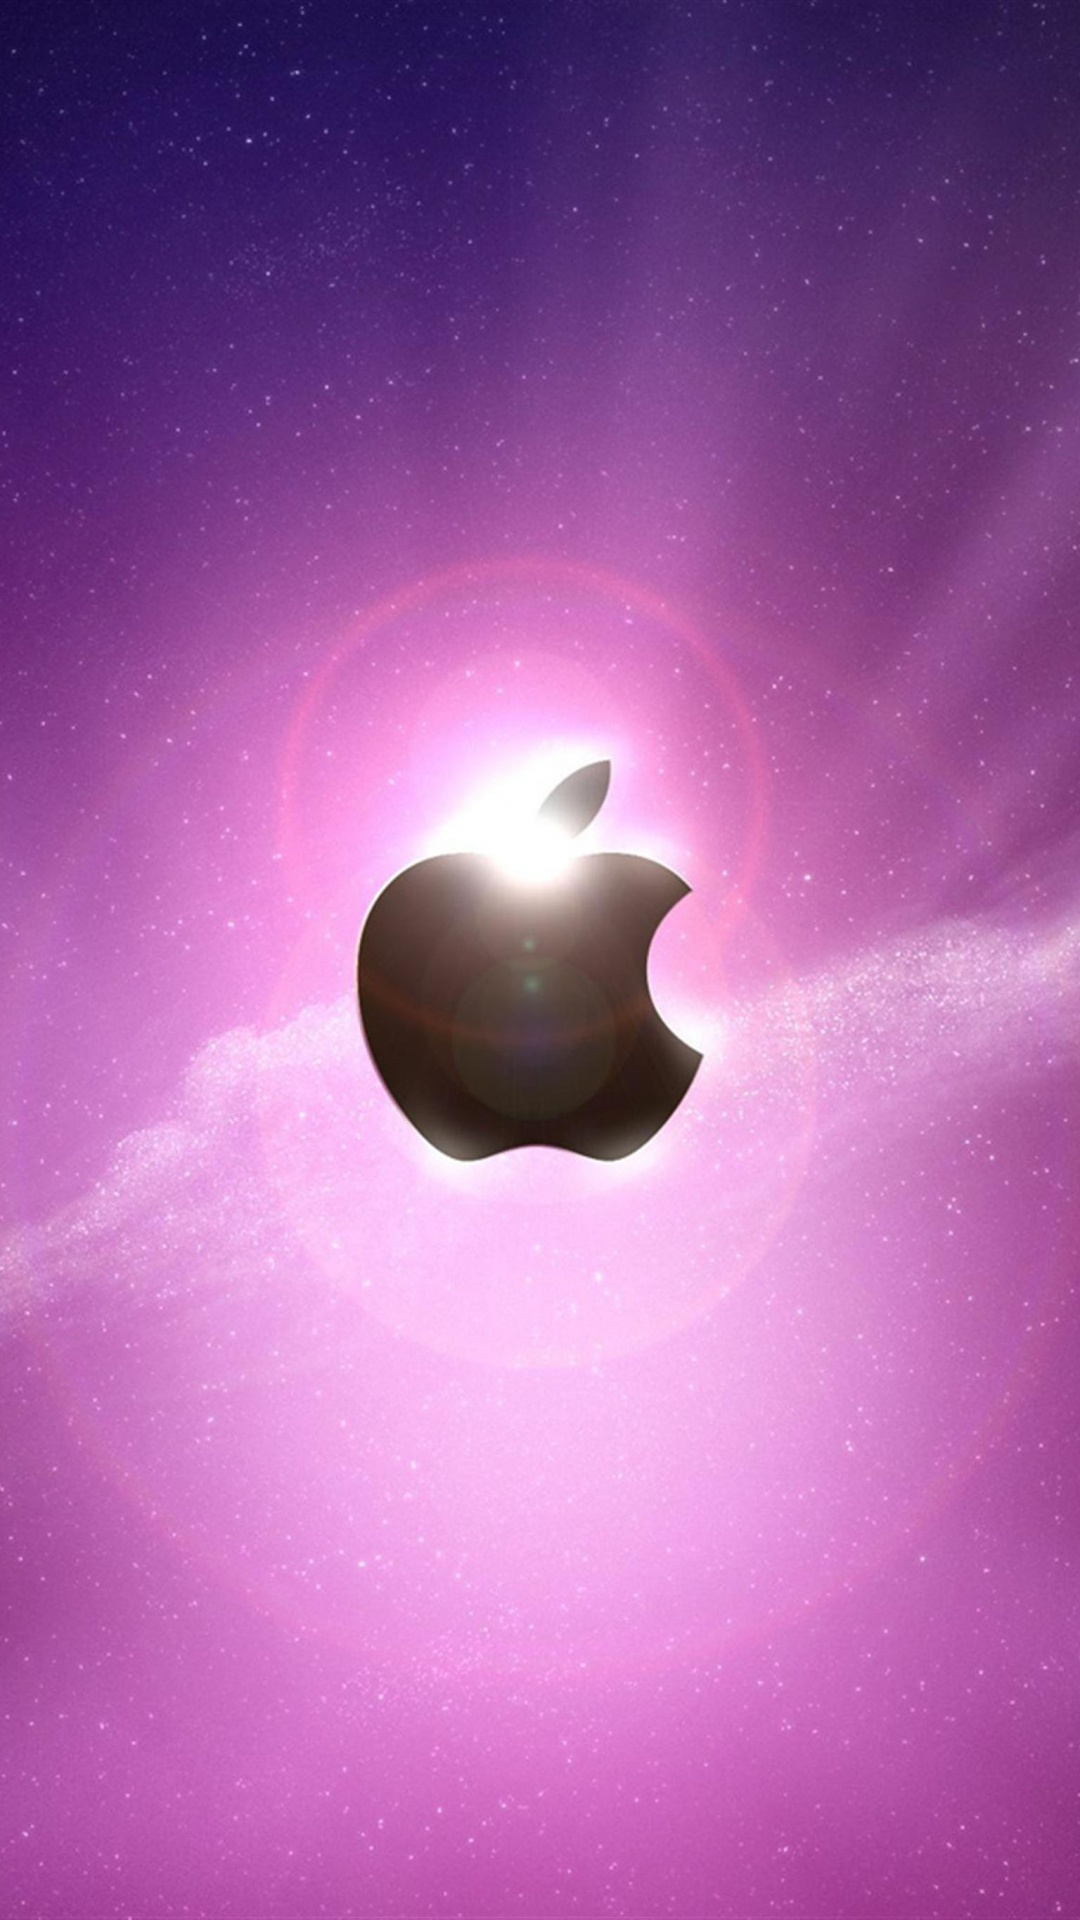 Apple MacBook Pro, Purple, Violette, Atmosphère, Espace. Wallpaper in 1080x1920 Resolution